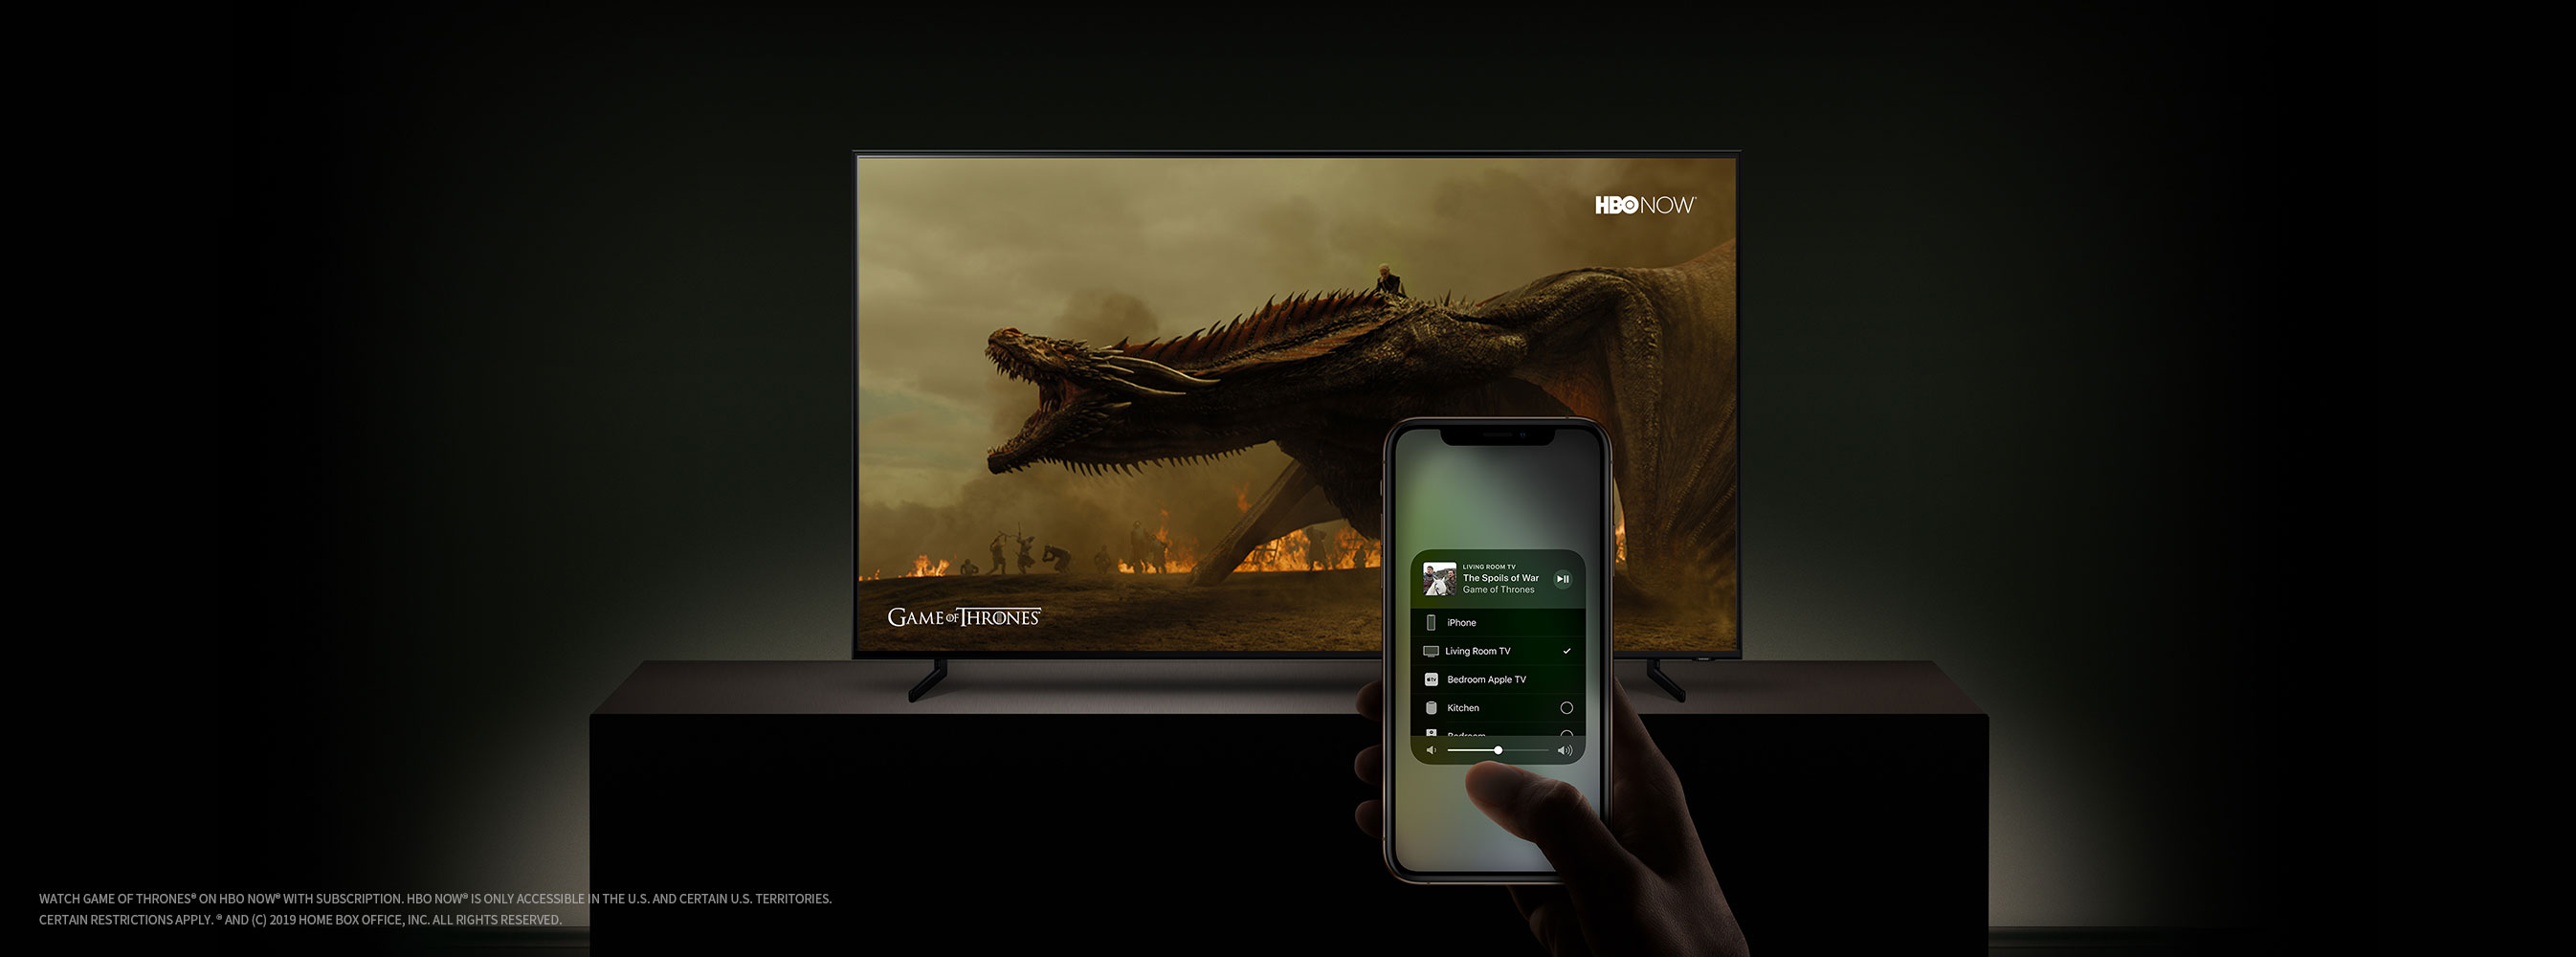 AV Samsung Smart TVs to Launch iTunes Movies Pic 2